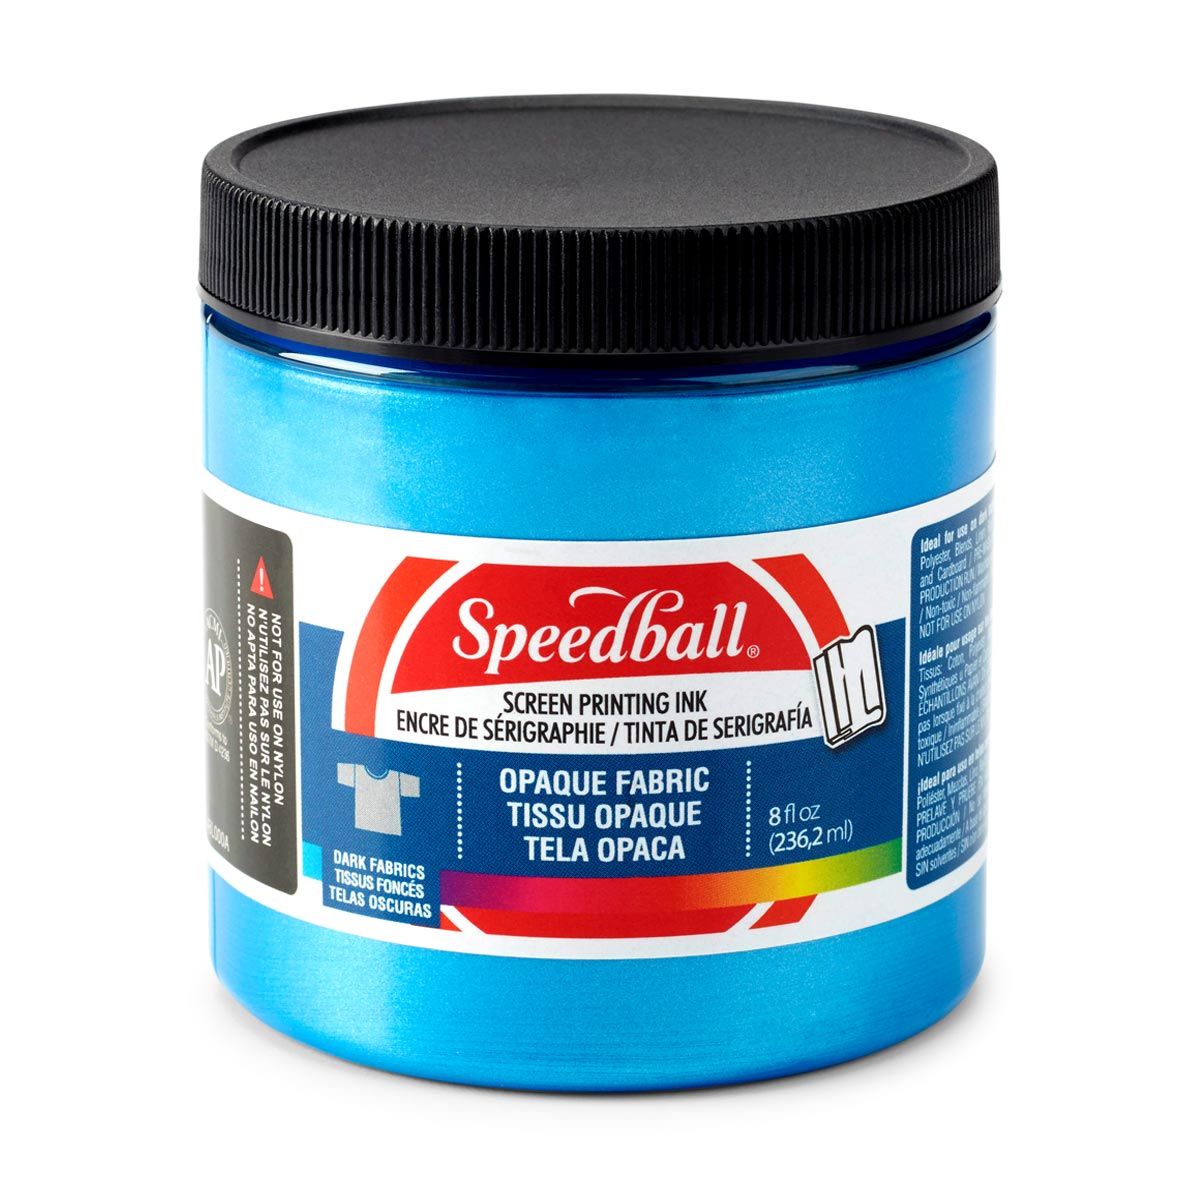 Speedball Iridescent Opaque Fabric Screen Printing Ink - Blue Topaz 8oz